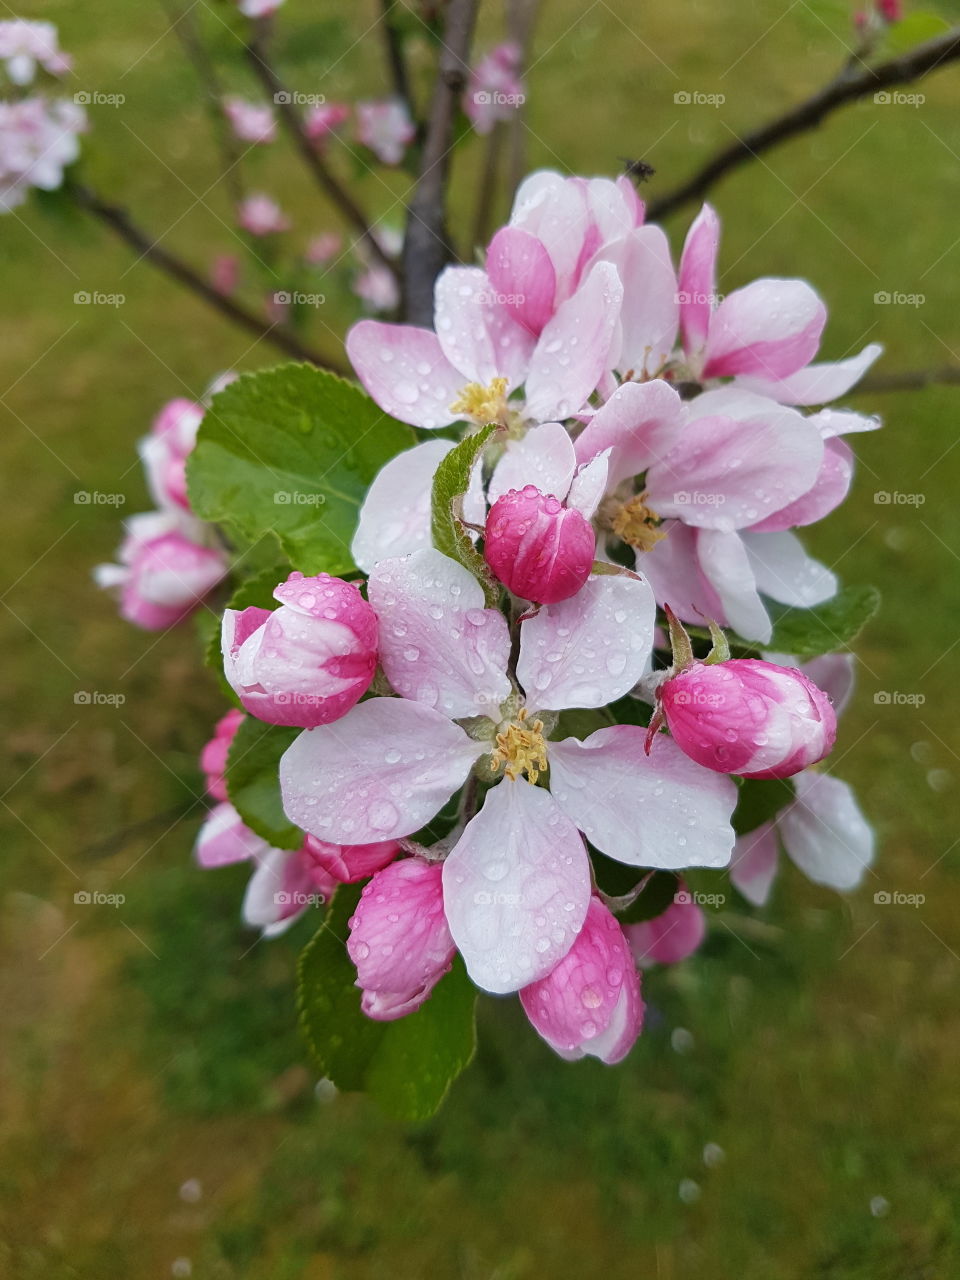 fruit tree blossom